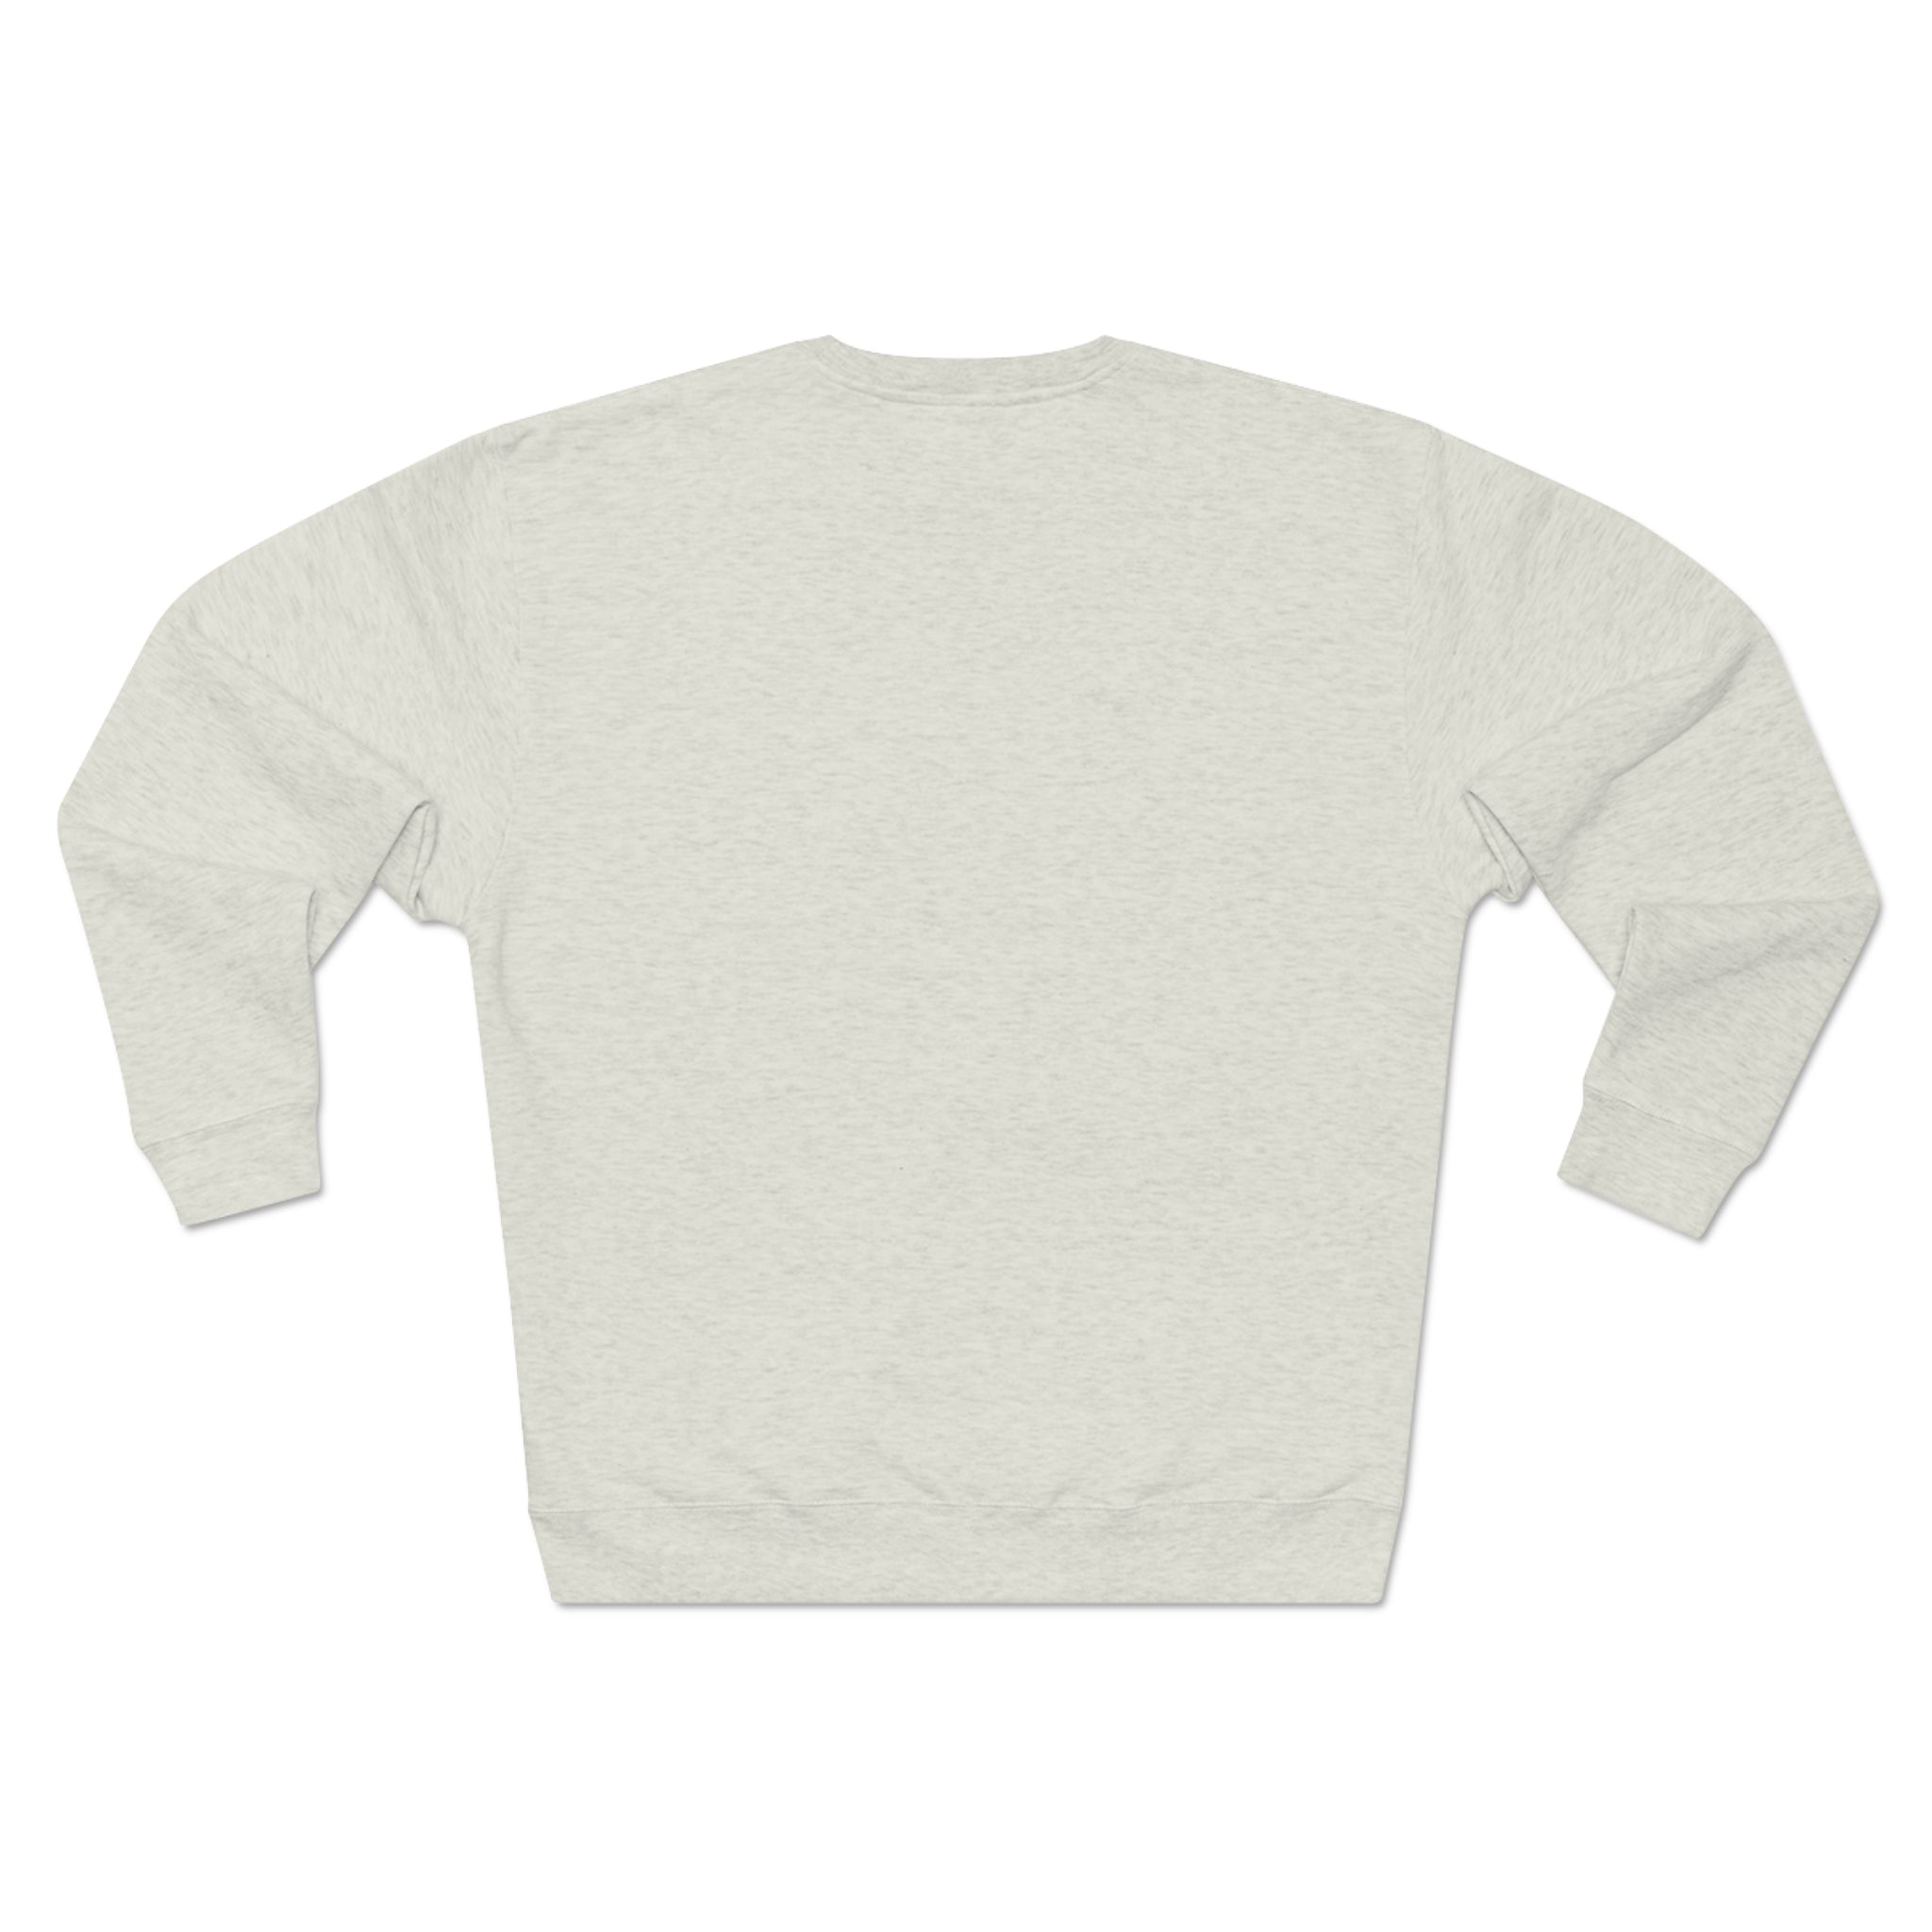 Unisex Premium Crewneck Sweatshirt - Yoga and Pilates Shirt - "Be the change" - Personal Hour for Yoga and Meditations 